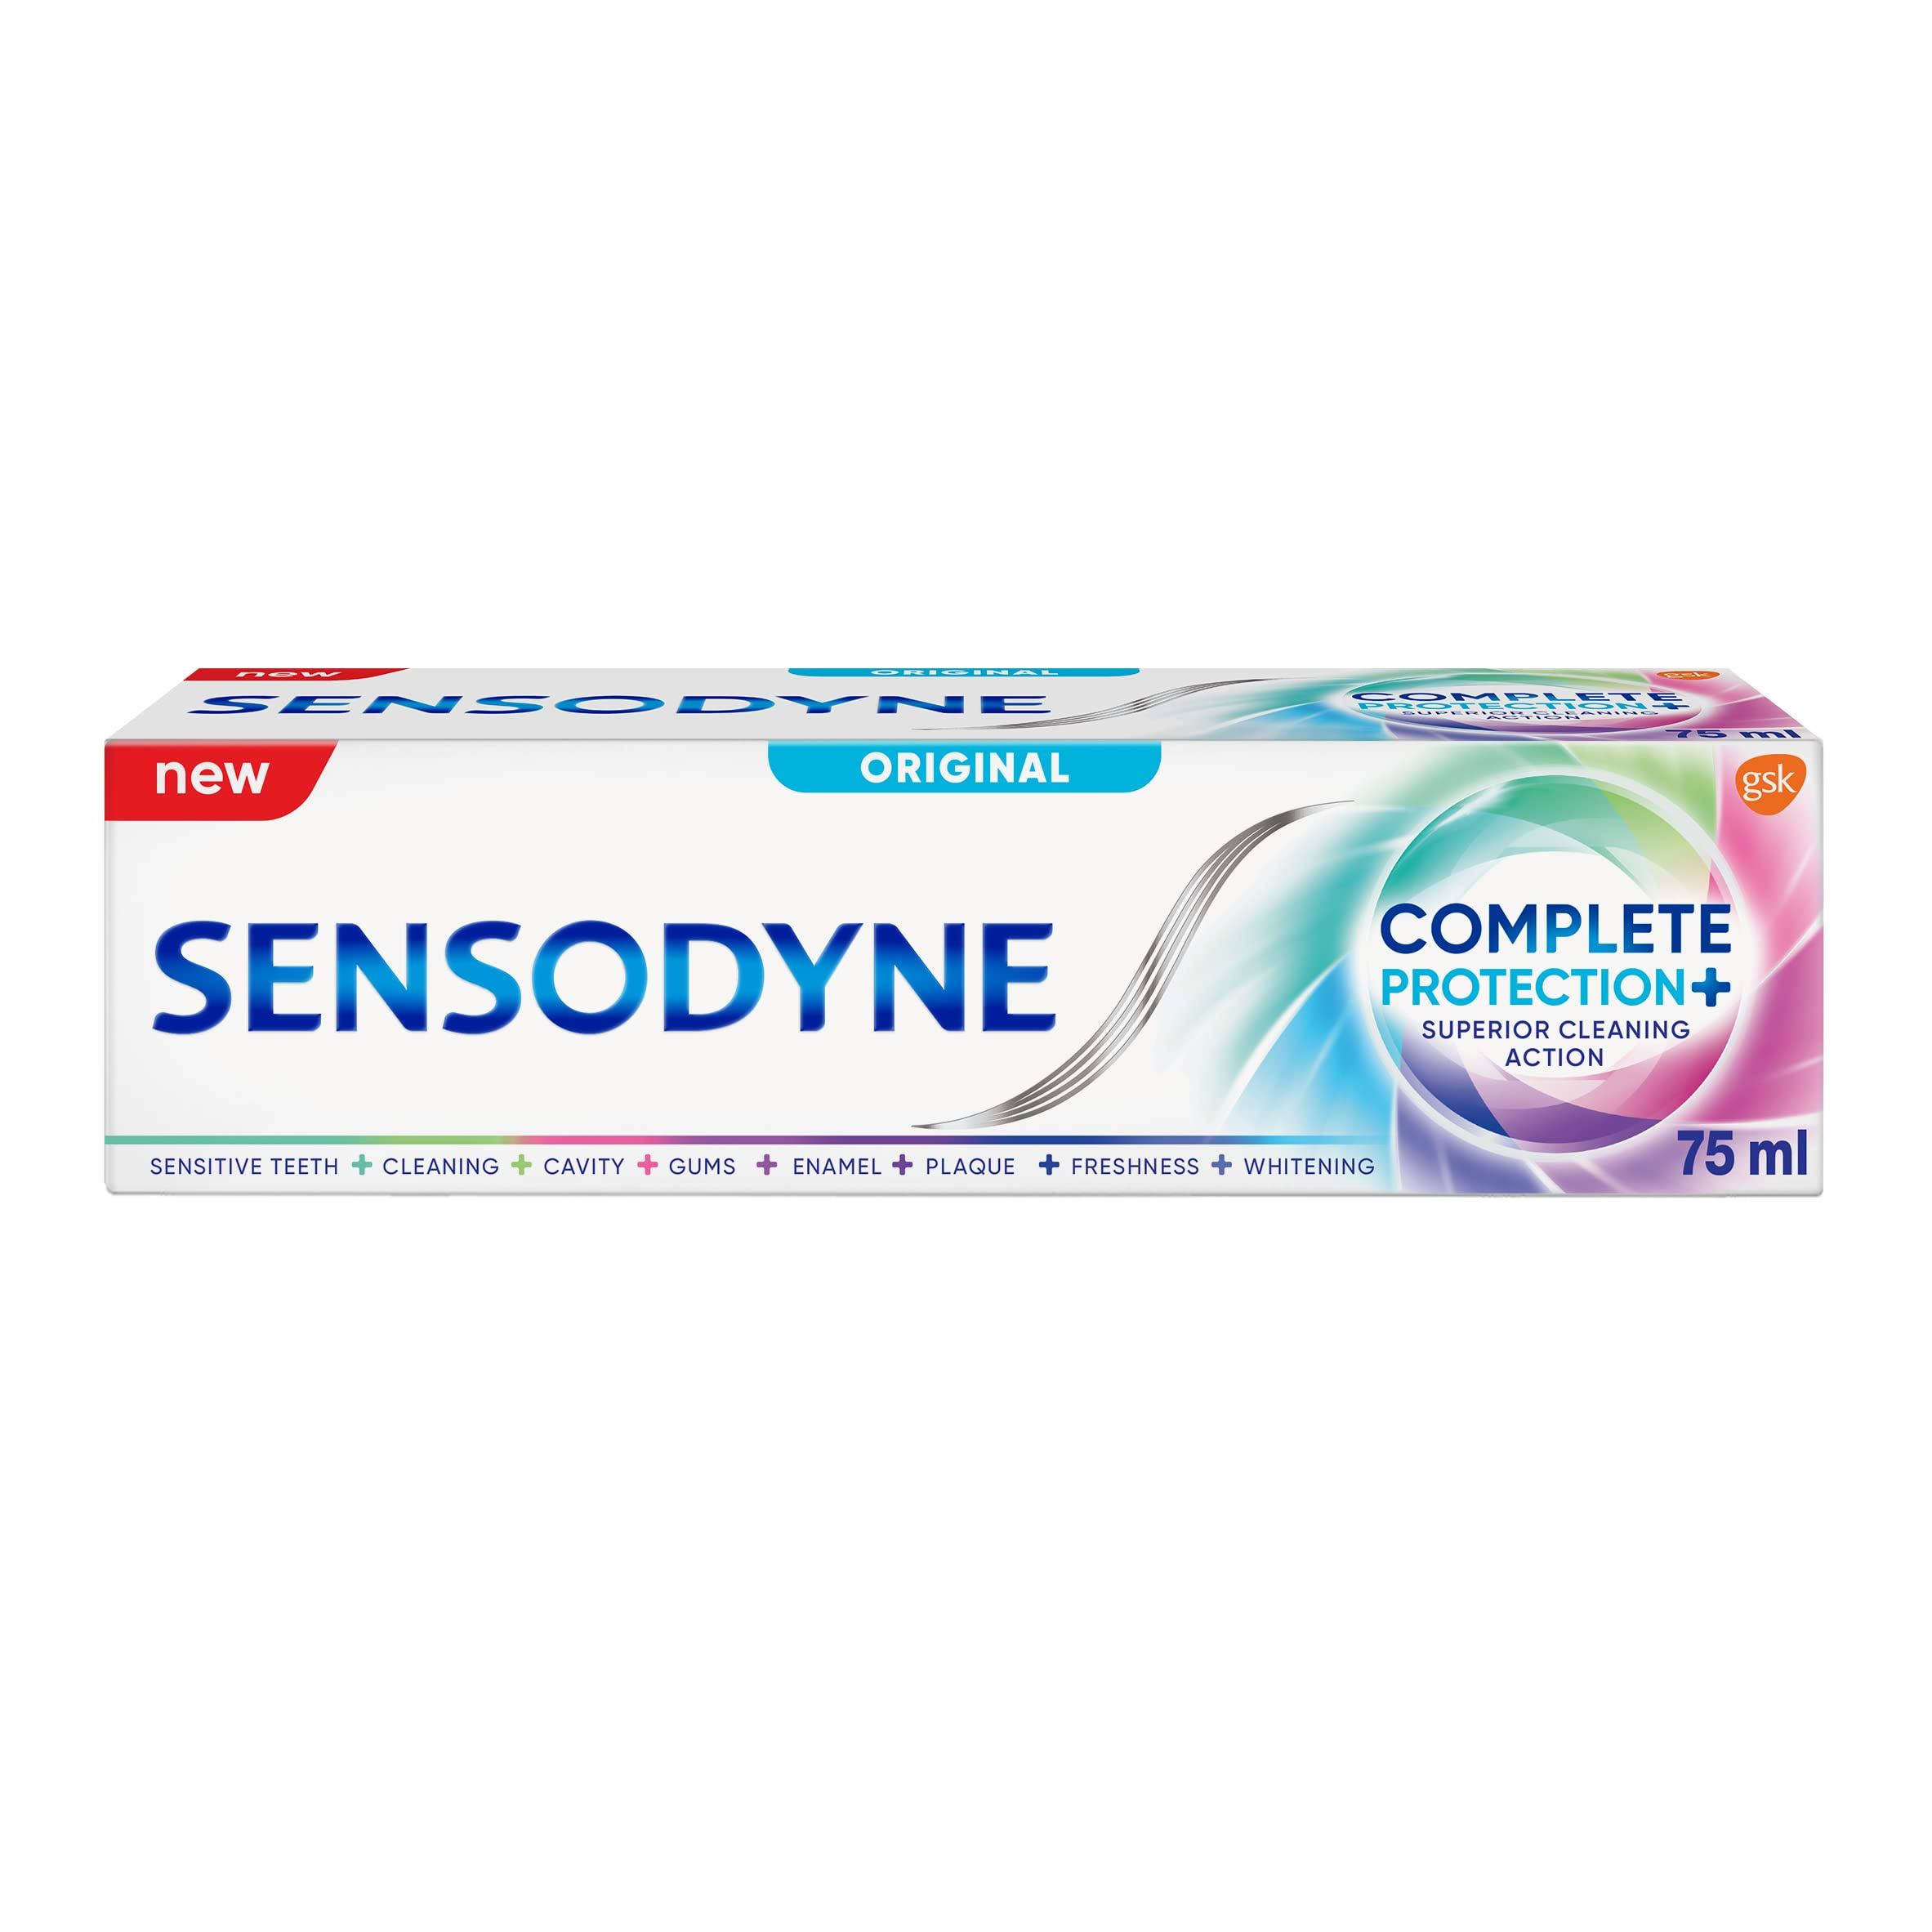 Sensodyne Sensitive Toothpaste Complete Protection Original 75ml